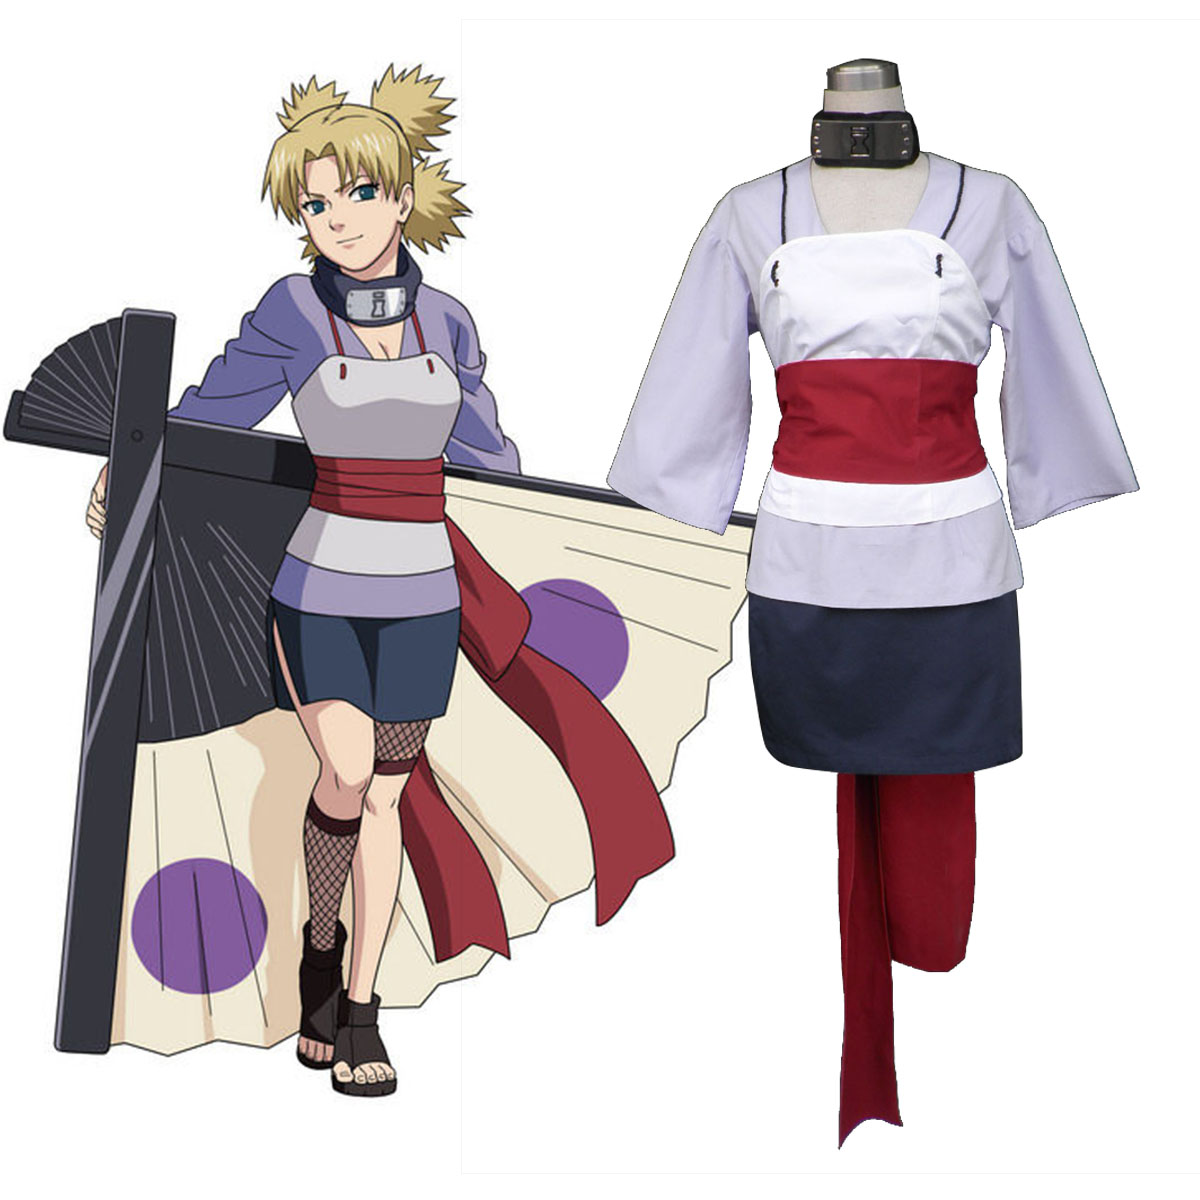 Naruto Temari 2 Anime Cosplay Costumes Outfit